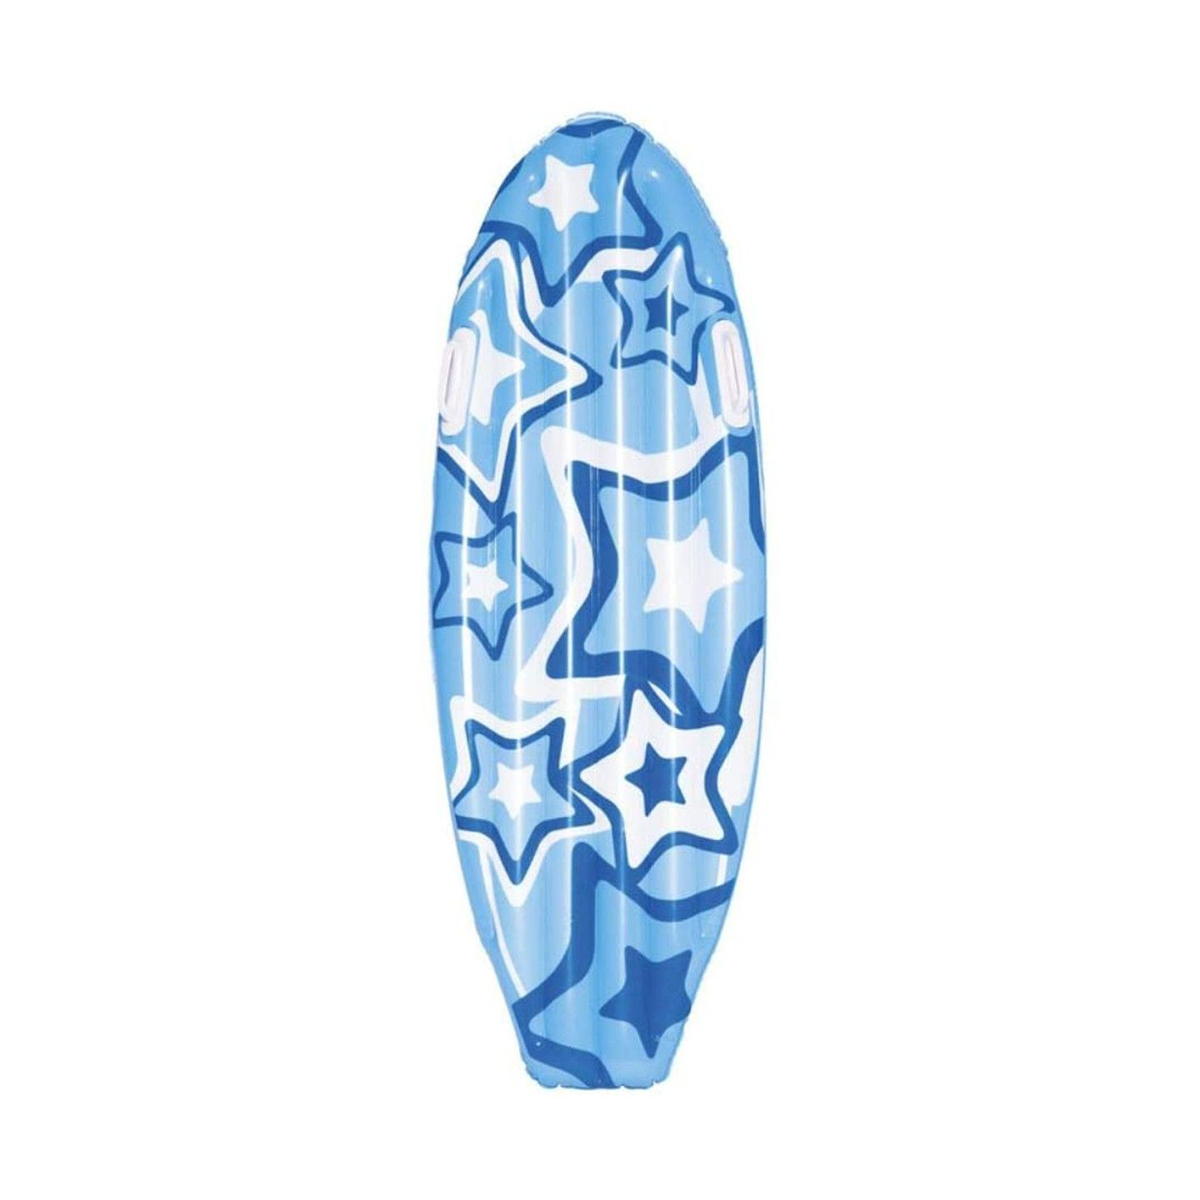 Placa de surf gonflabila Bestway, 114 x 46 cm, Albastru 1:14 imagine 2022 protejamcopilaria.ro